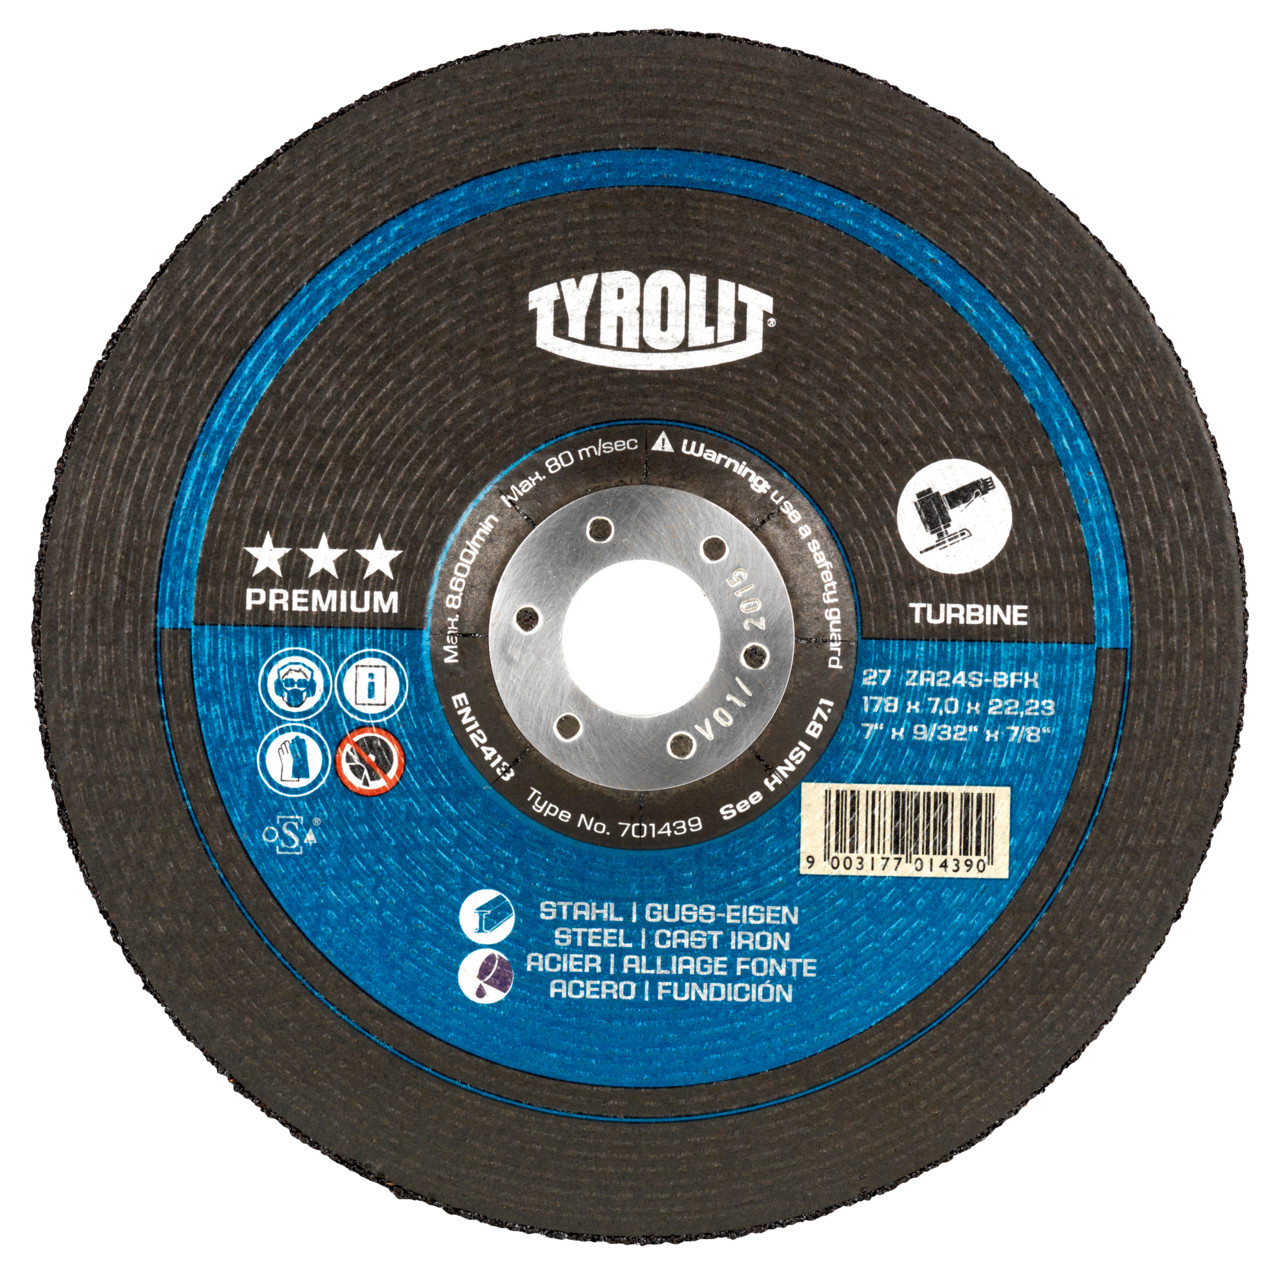 Disco TYROLIT DxUxH 230x7x22,23 T-GRIND per acciaio e ghisa, forma: 27 - versione offset, Art. 701515